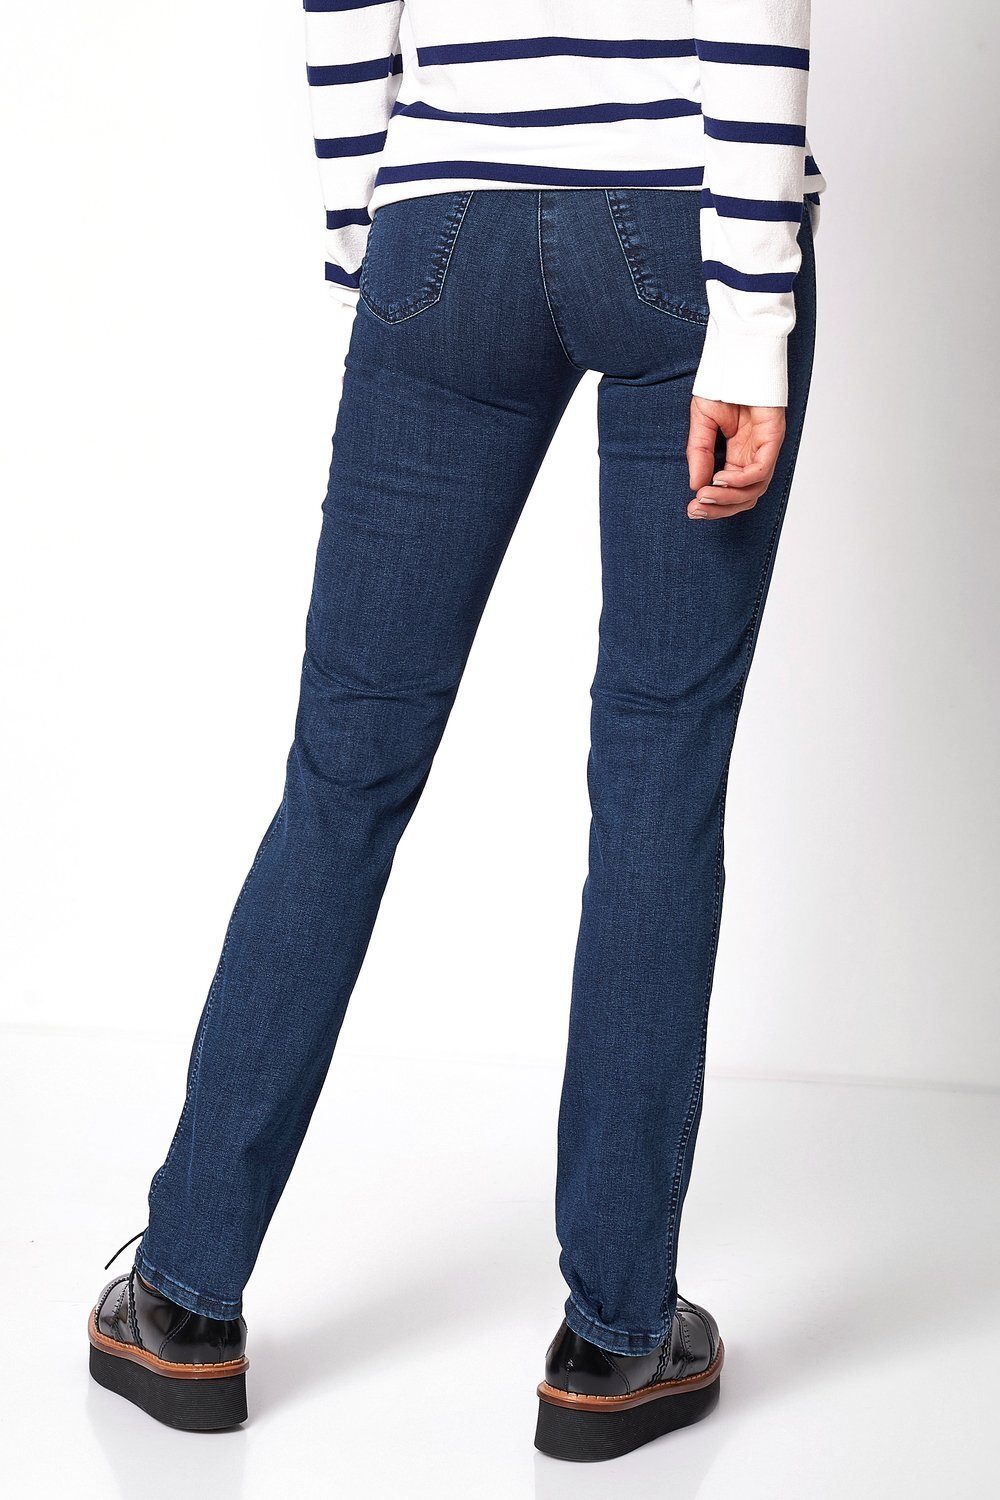 dunkelblau 5-Pocket-Jeans 582 TONI - be hoher mit Leibhöhe loved